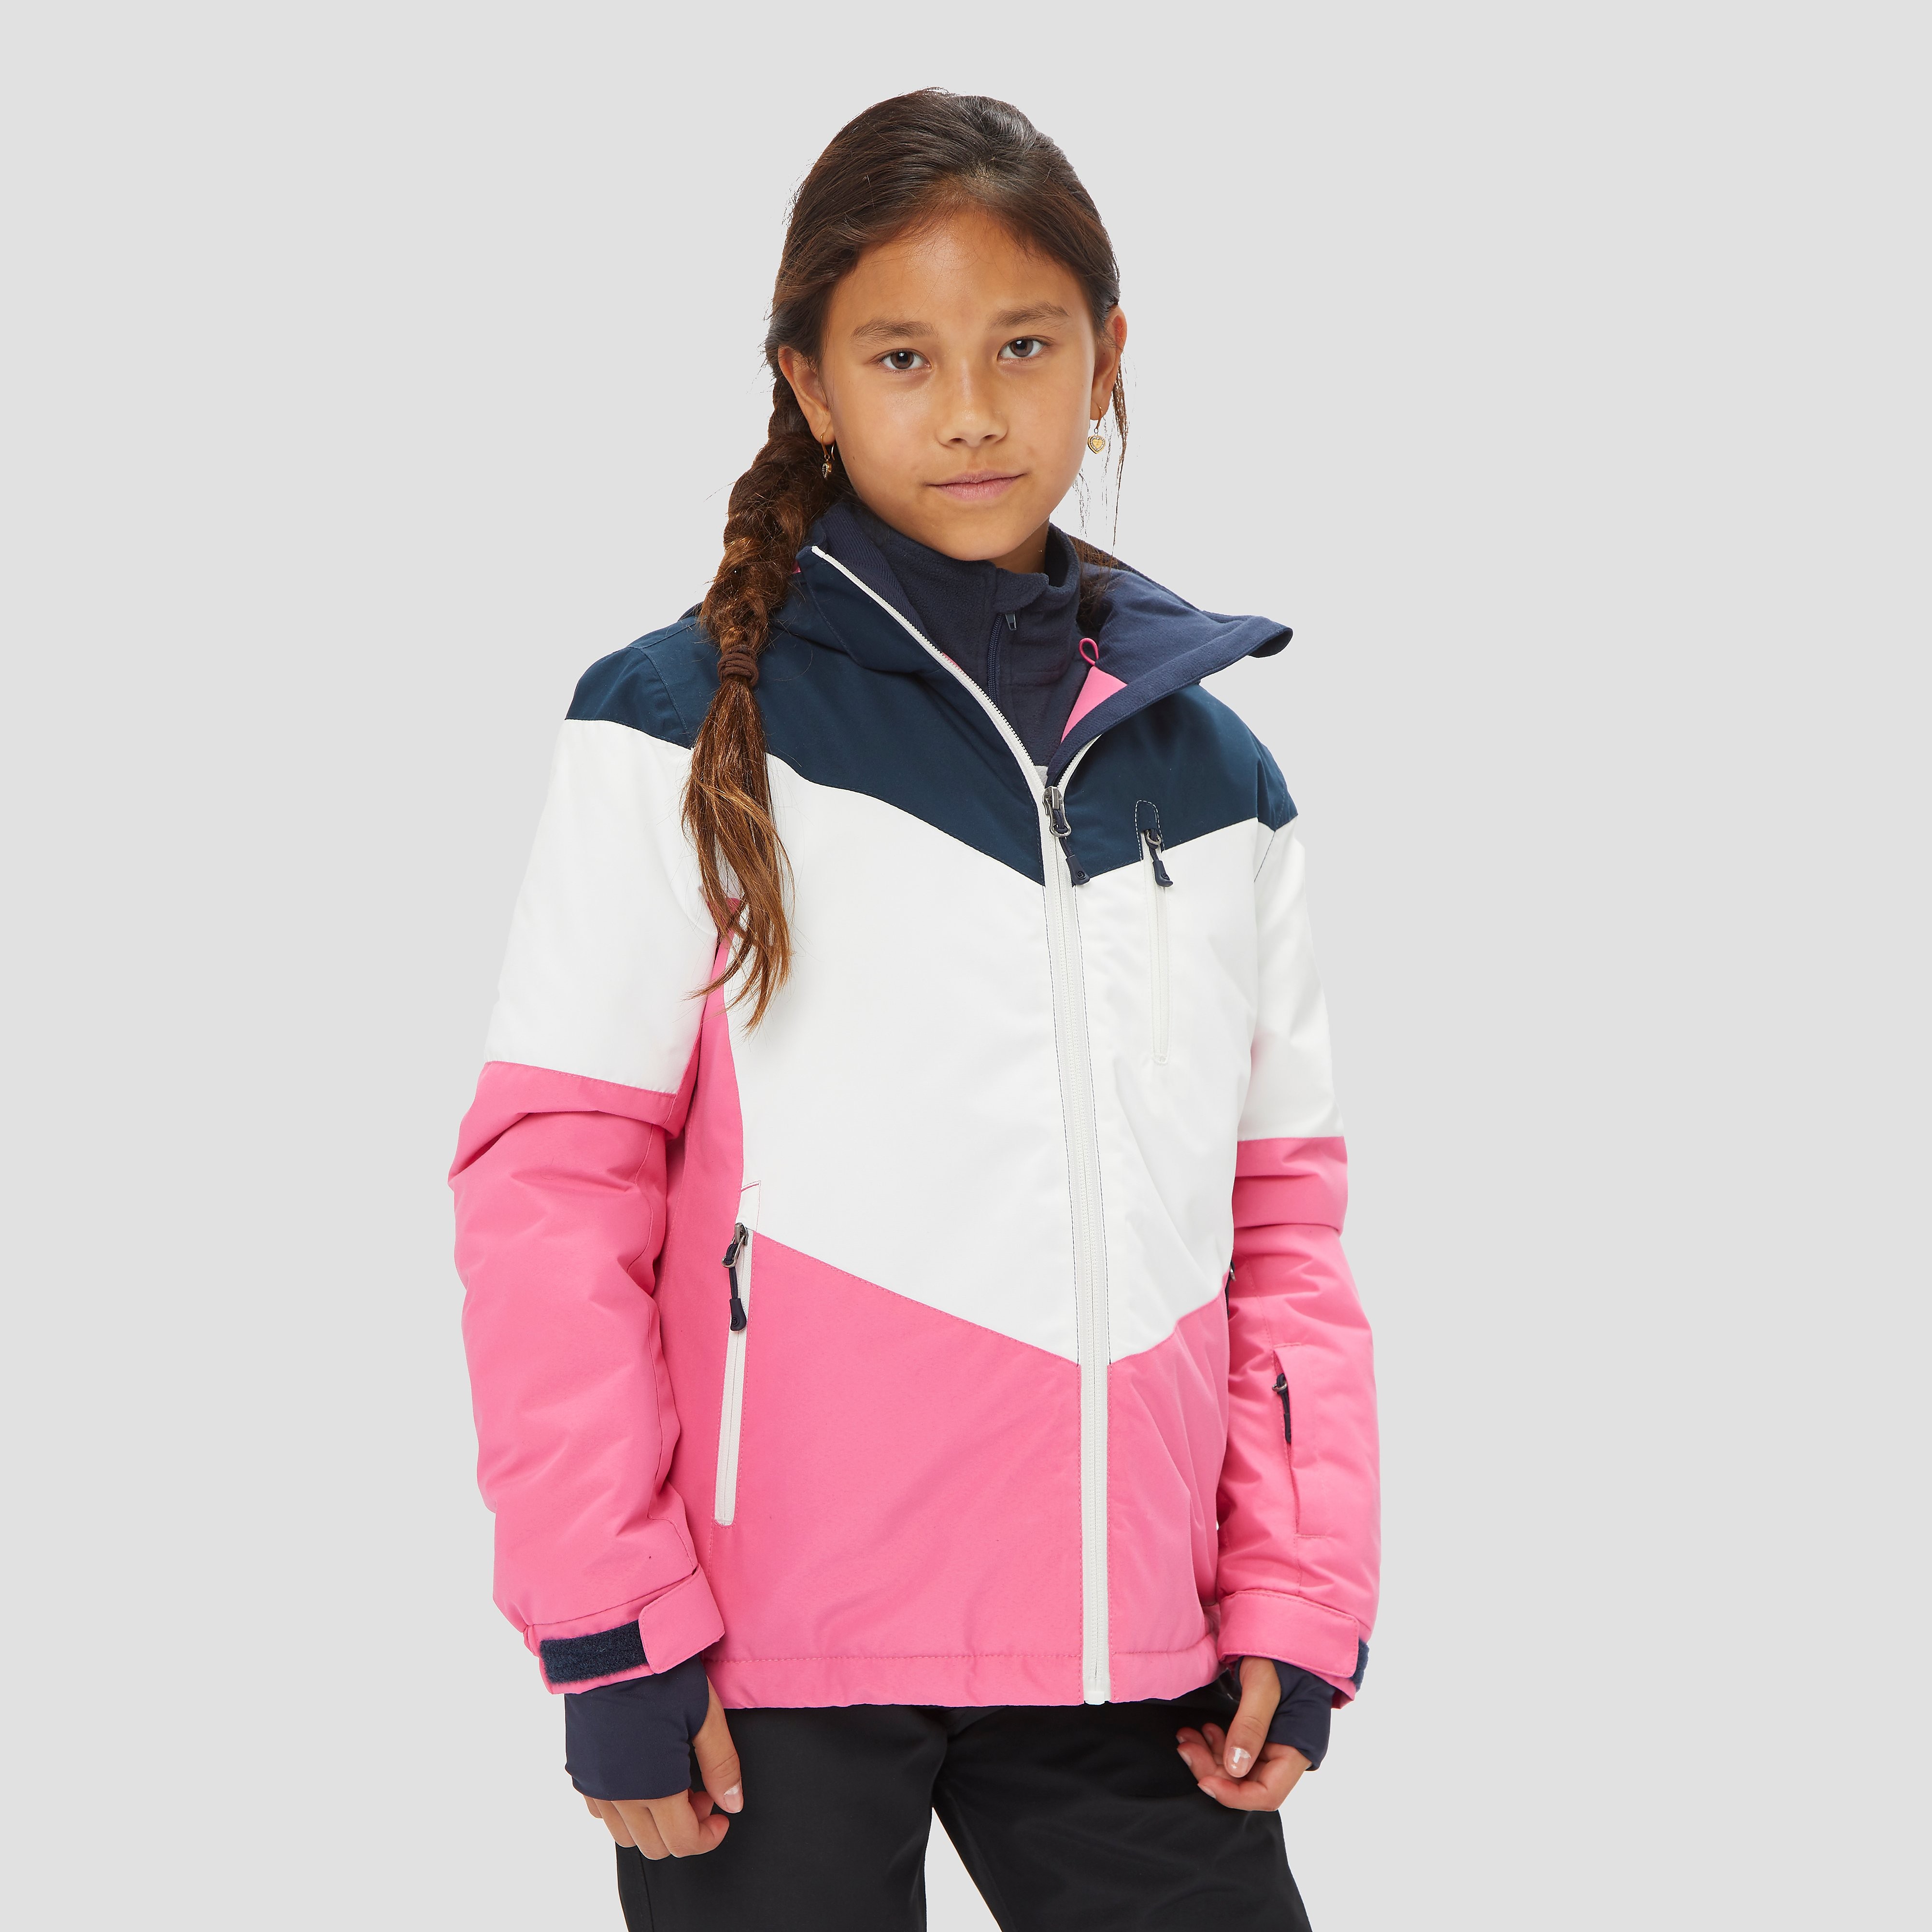 Spex parix ski jas roze kinderen